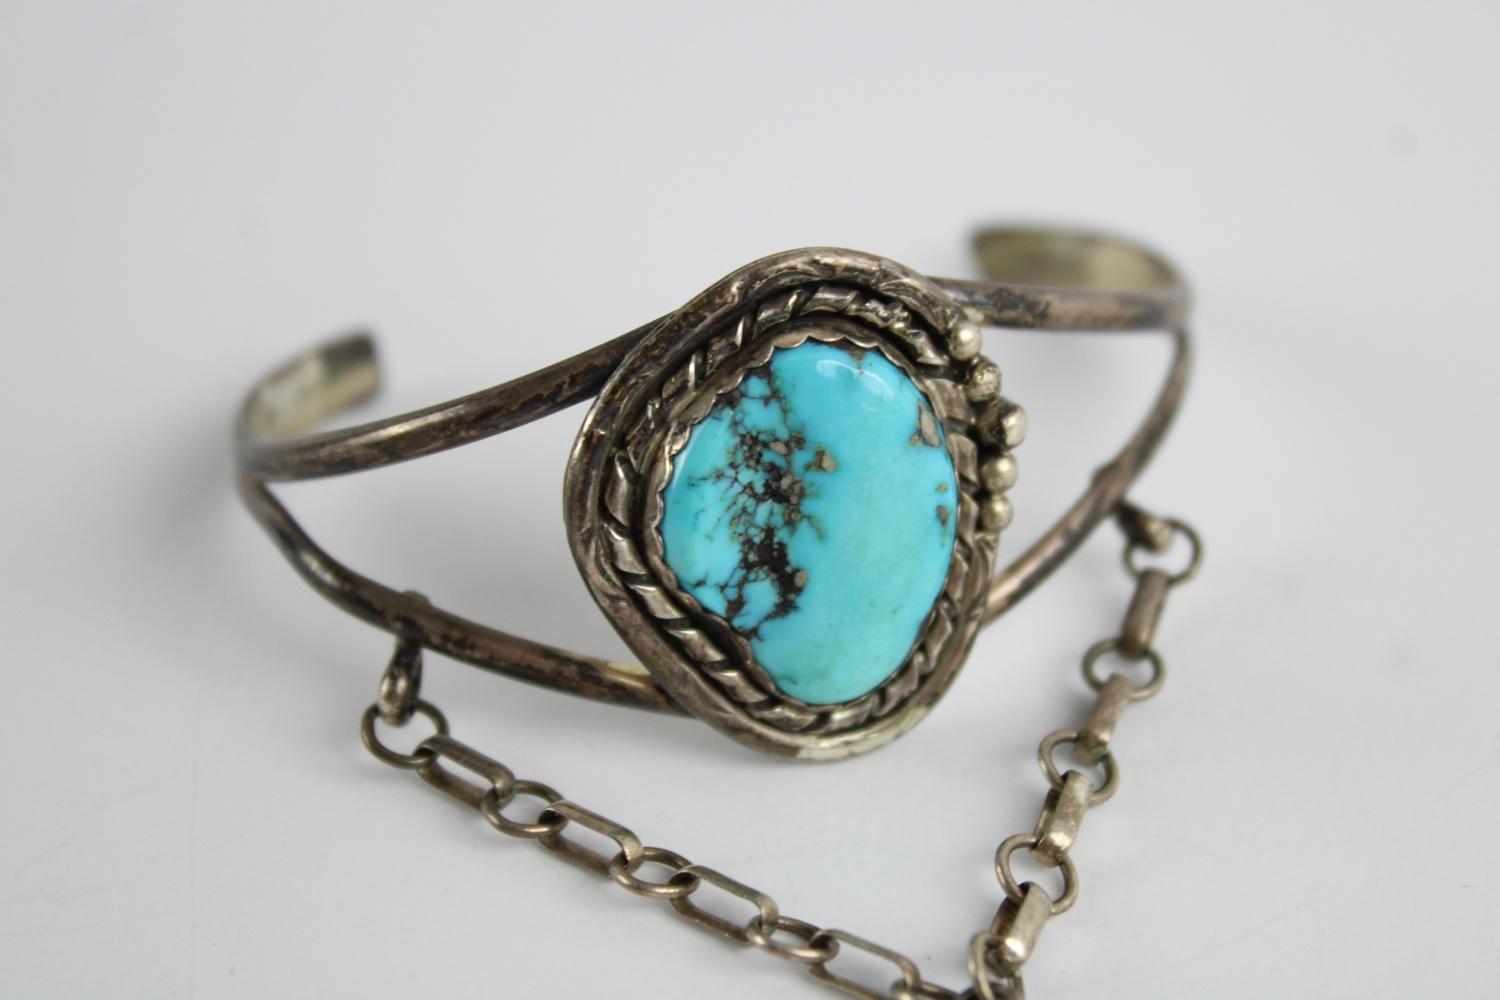 Vintage .925 sterling silver ornate navajo turquoise ring Bracelet, Ring Size N - Image 2 of 3